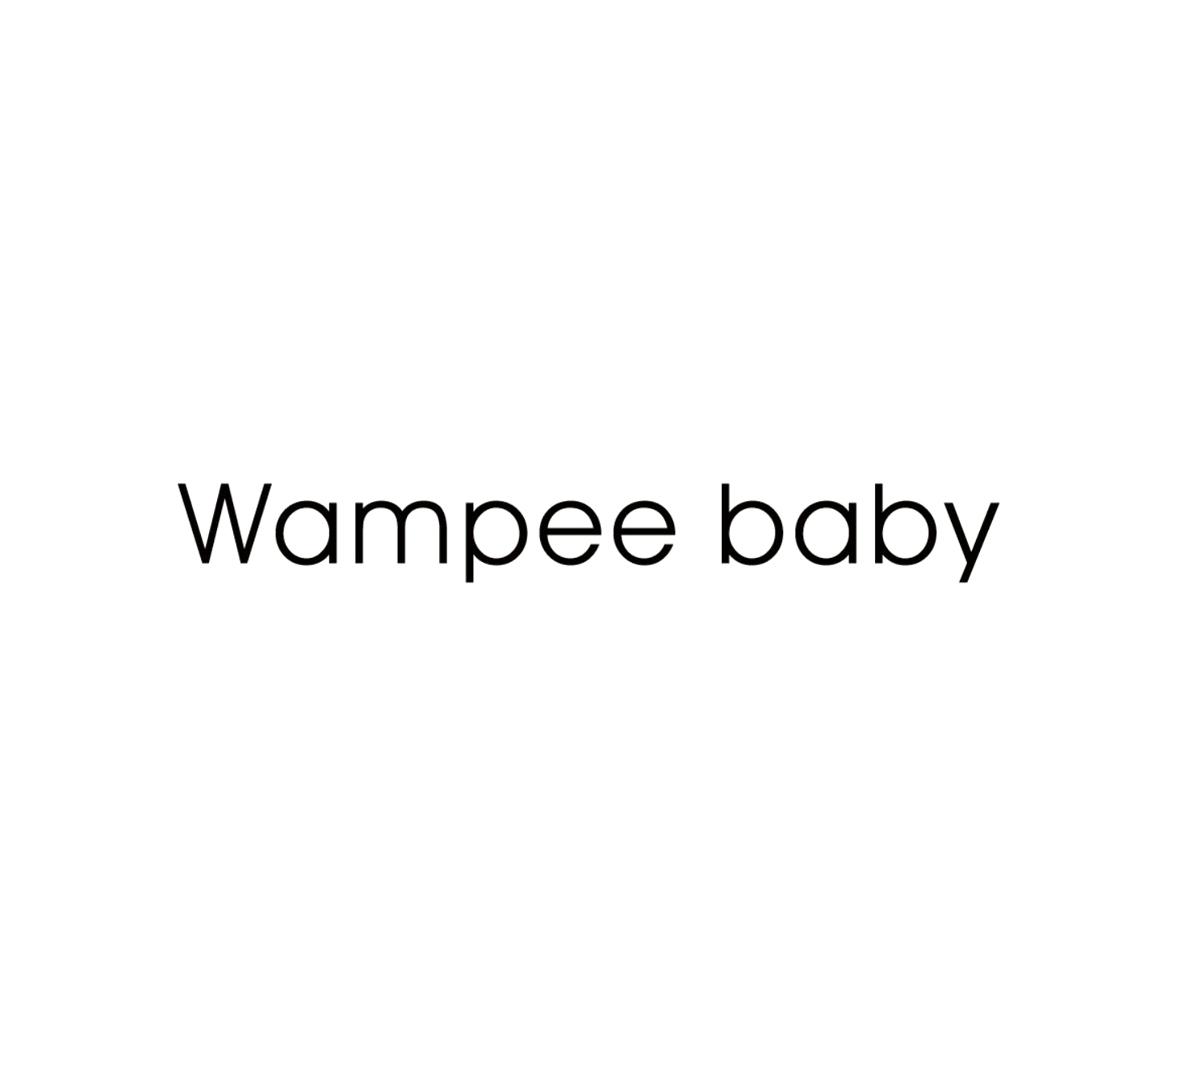 WAMPEE BABY商标转让